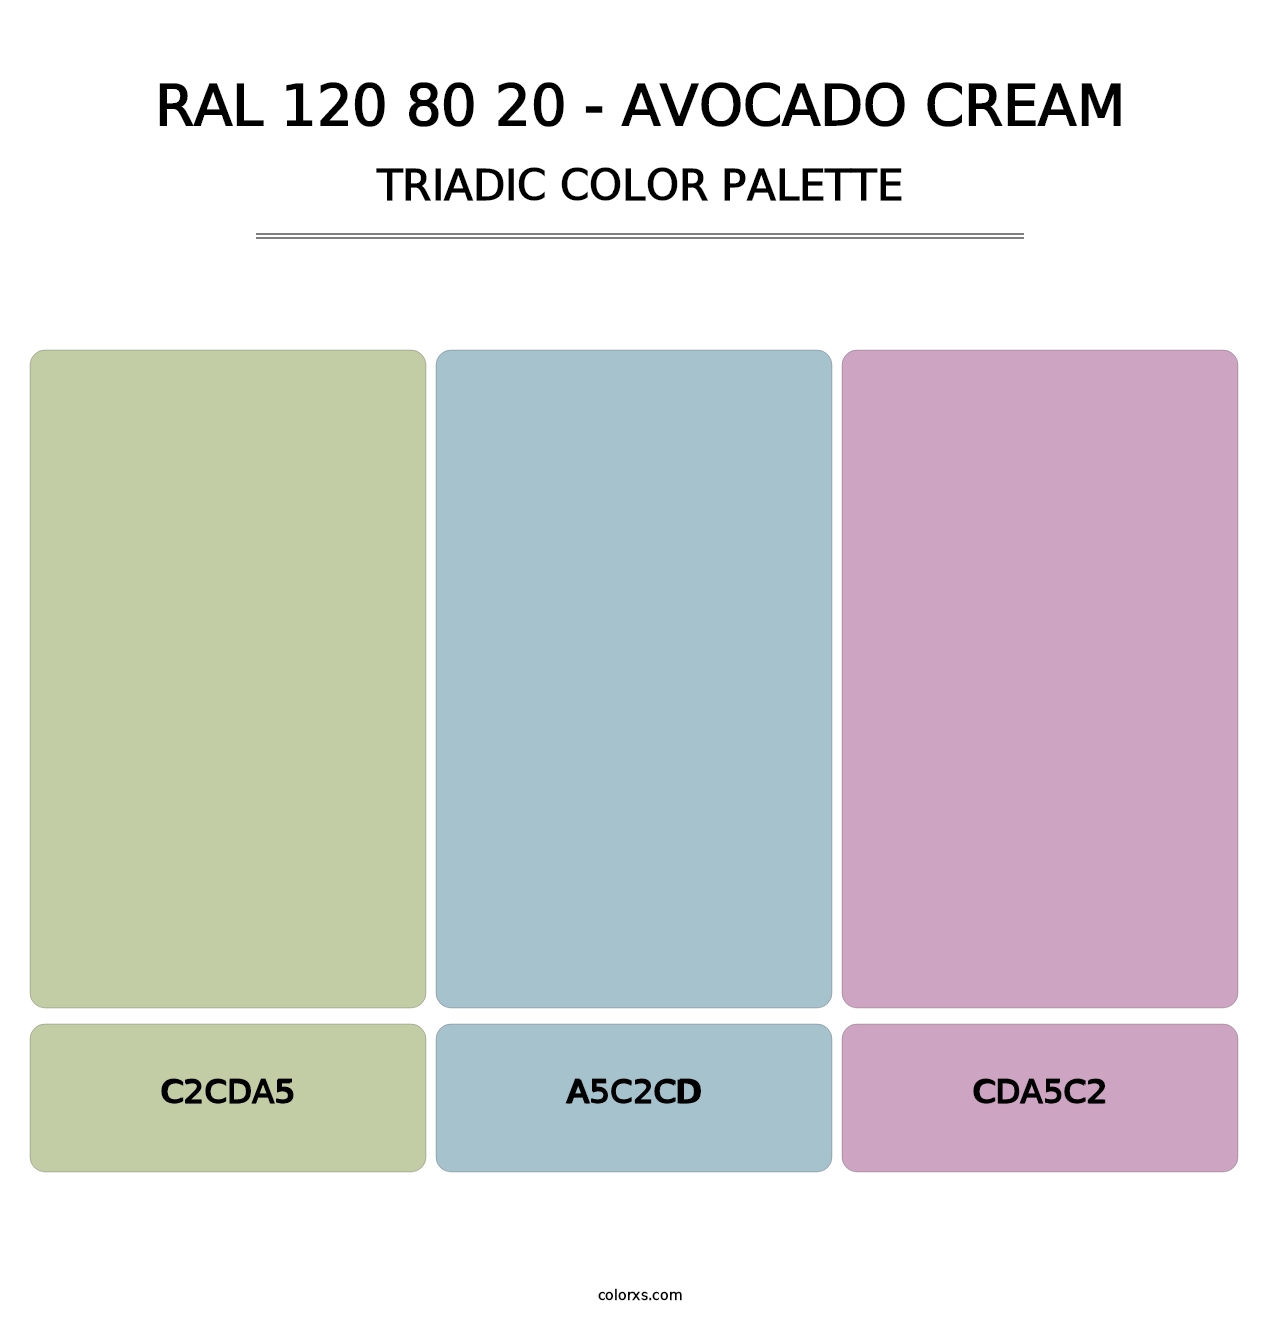 RAL 120 80 20 - Avocado Cream - Triadic Color Palette